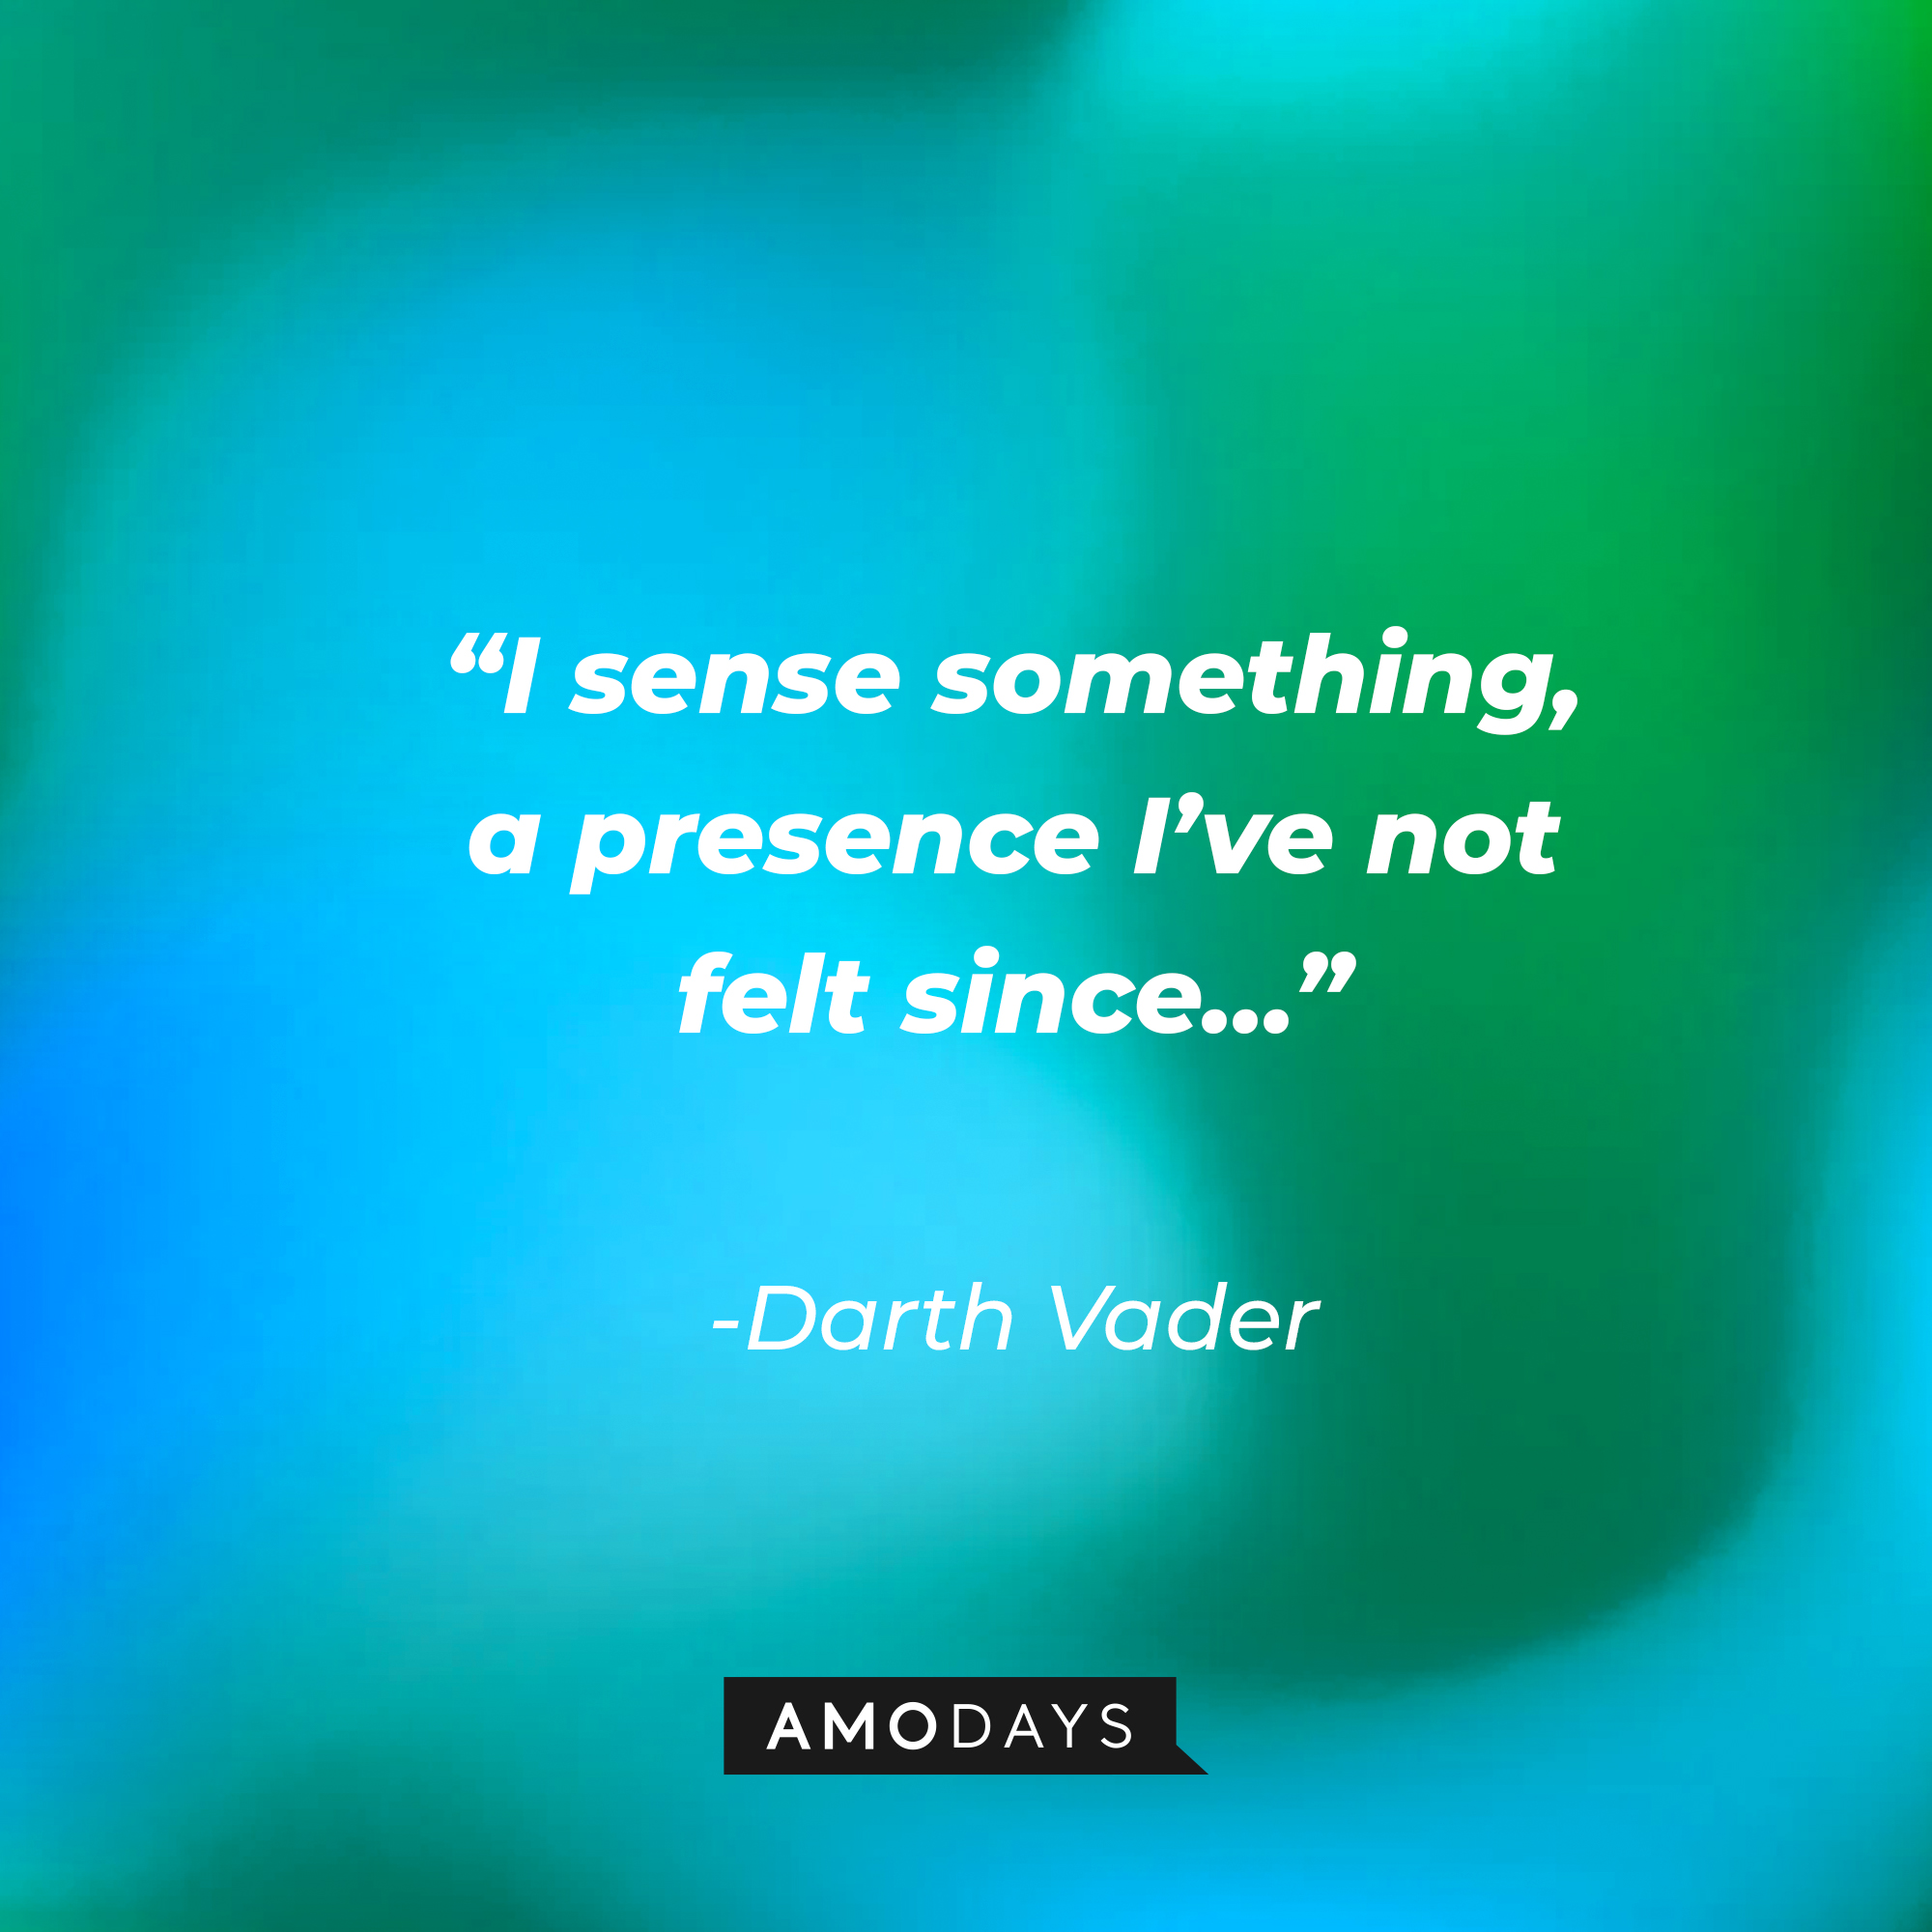 Darth Vader's quote: "I sense something, a presence I've not felt since..." | Source: facebook.com/StarWars